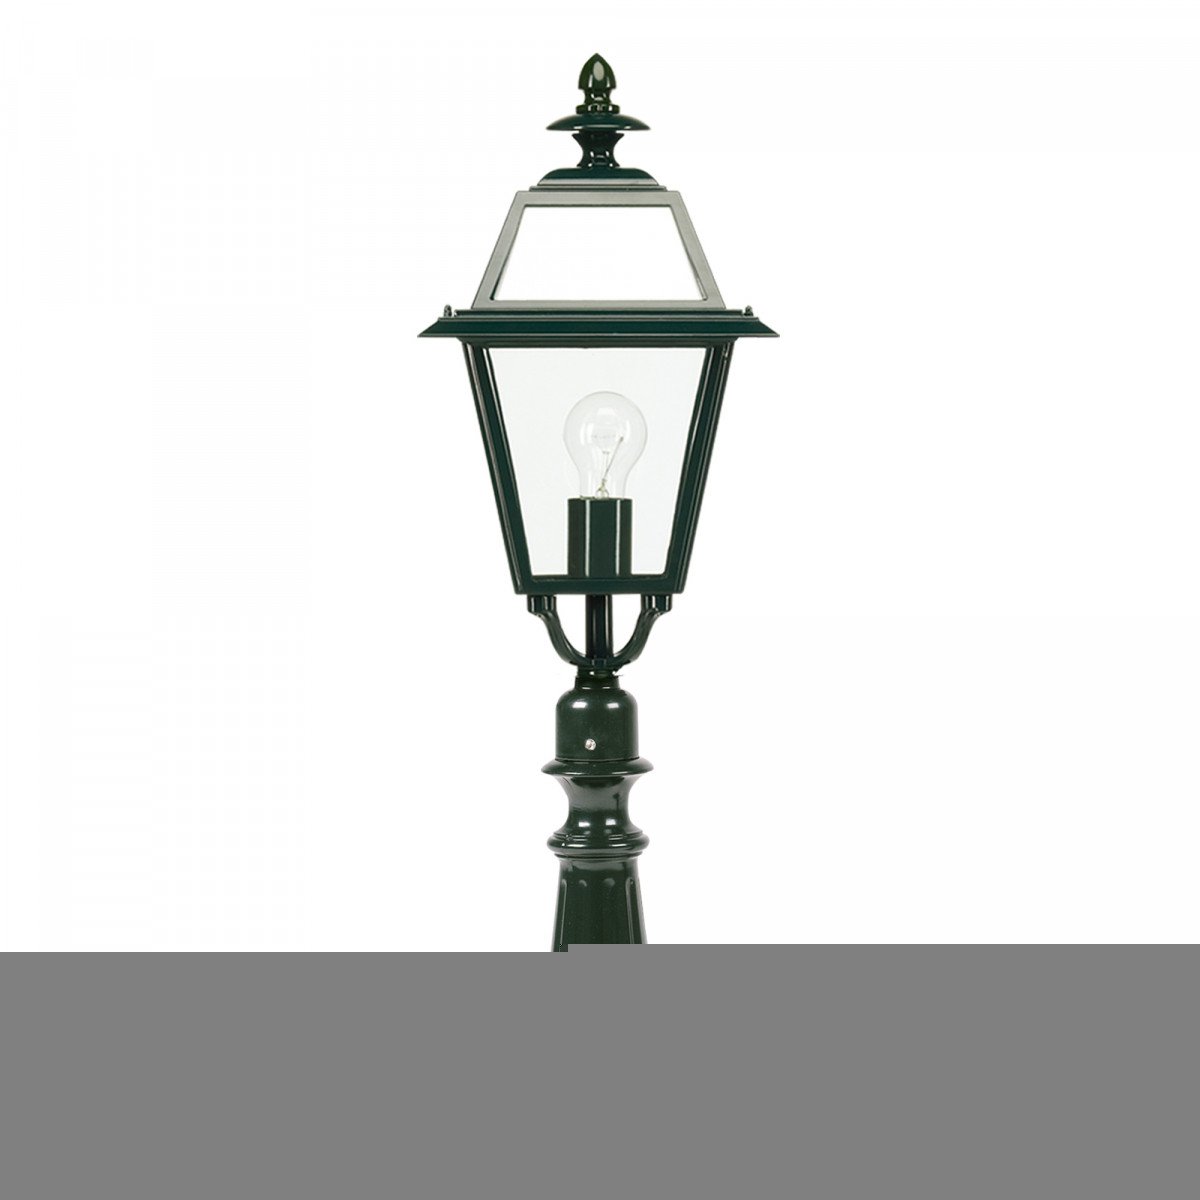 Lampe de jardin sur pied Doenrade (7226) de KS Lighting avec lanterne carrée